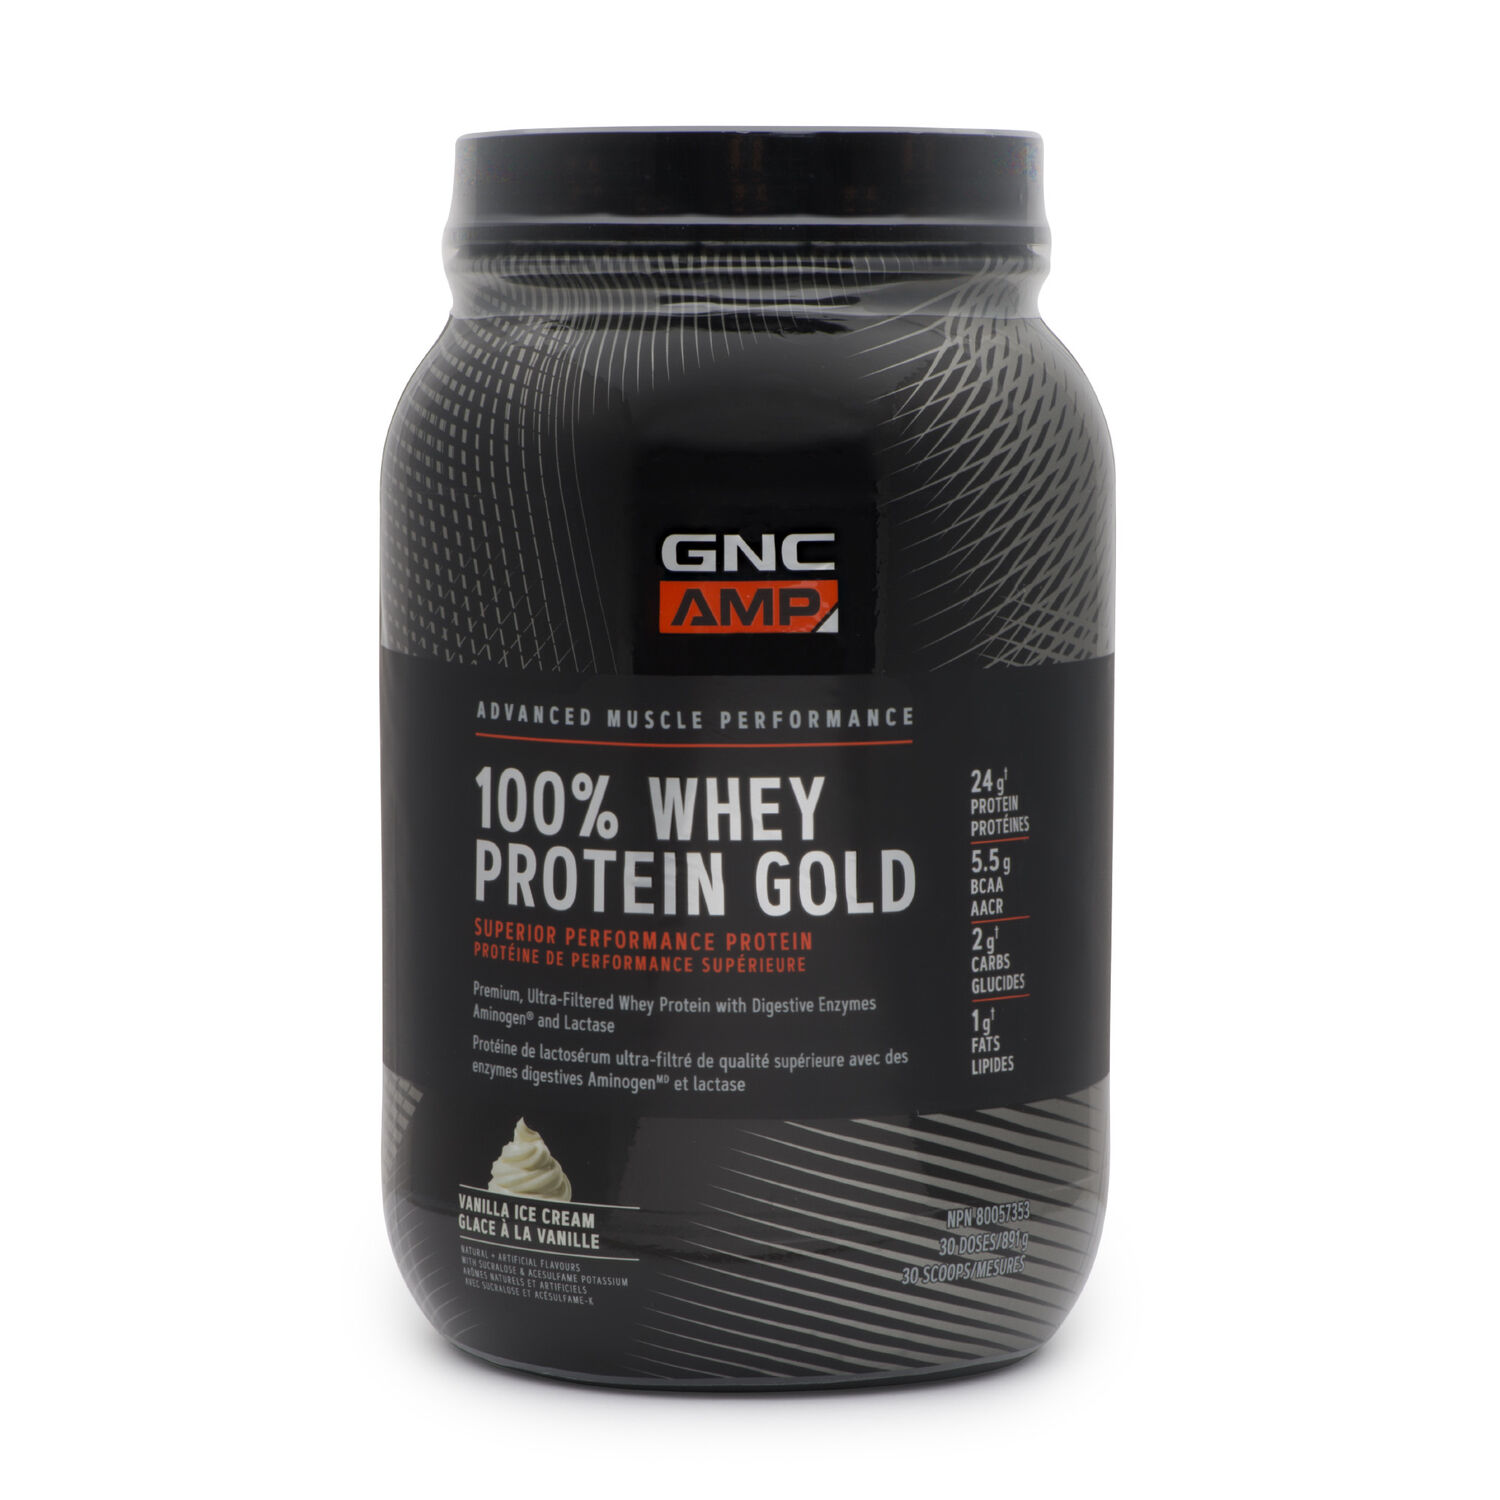 GNC AMP 100% Whey Protein Gold - Vanilla Ice Cream